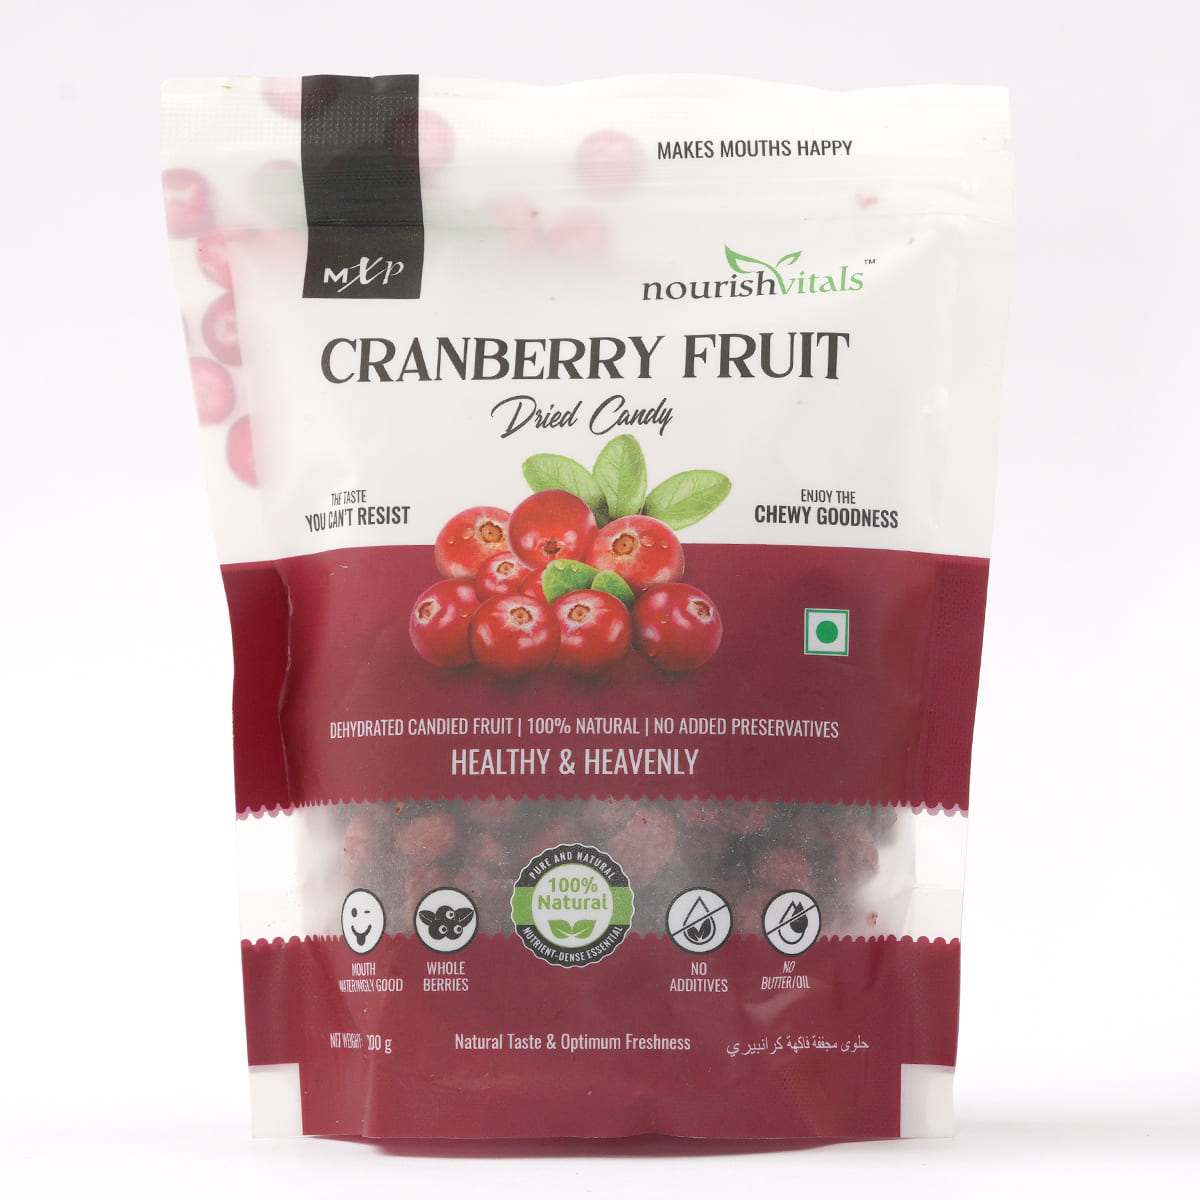 Apple Cherry Rib Candy | Rib Glaze - TPJ